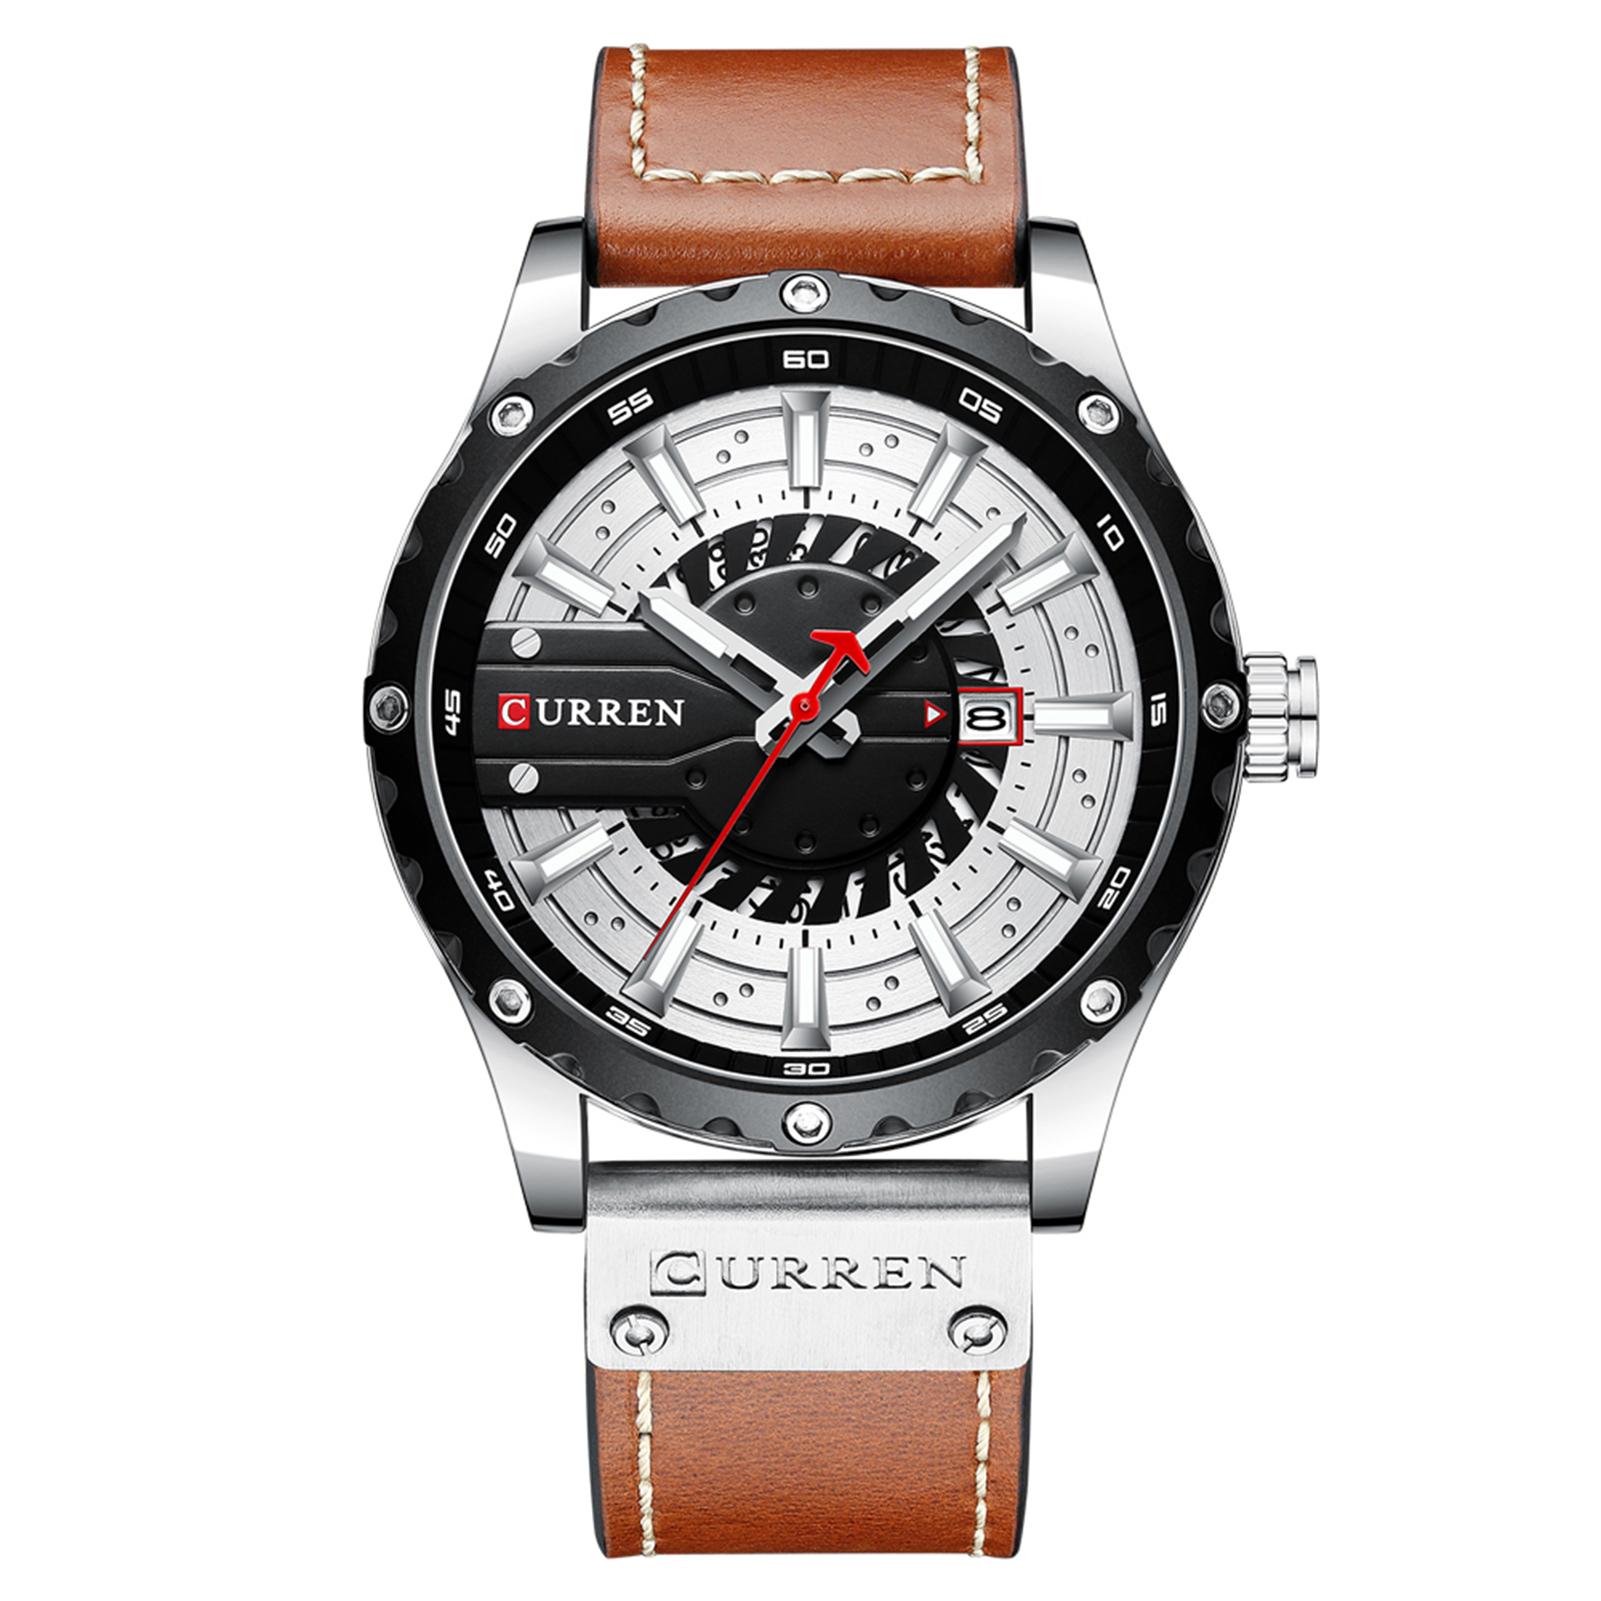 Đồng hồ đeo tay thời trang dây da 3ATM CURREN Men Quartz